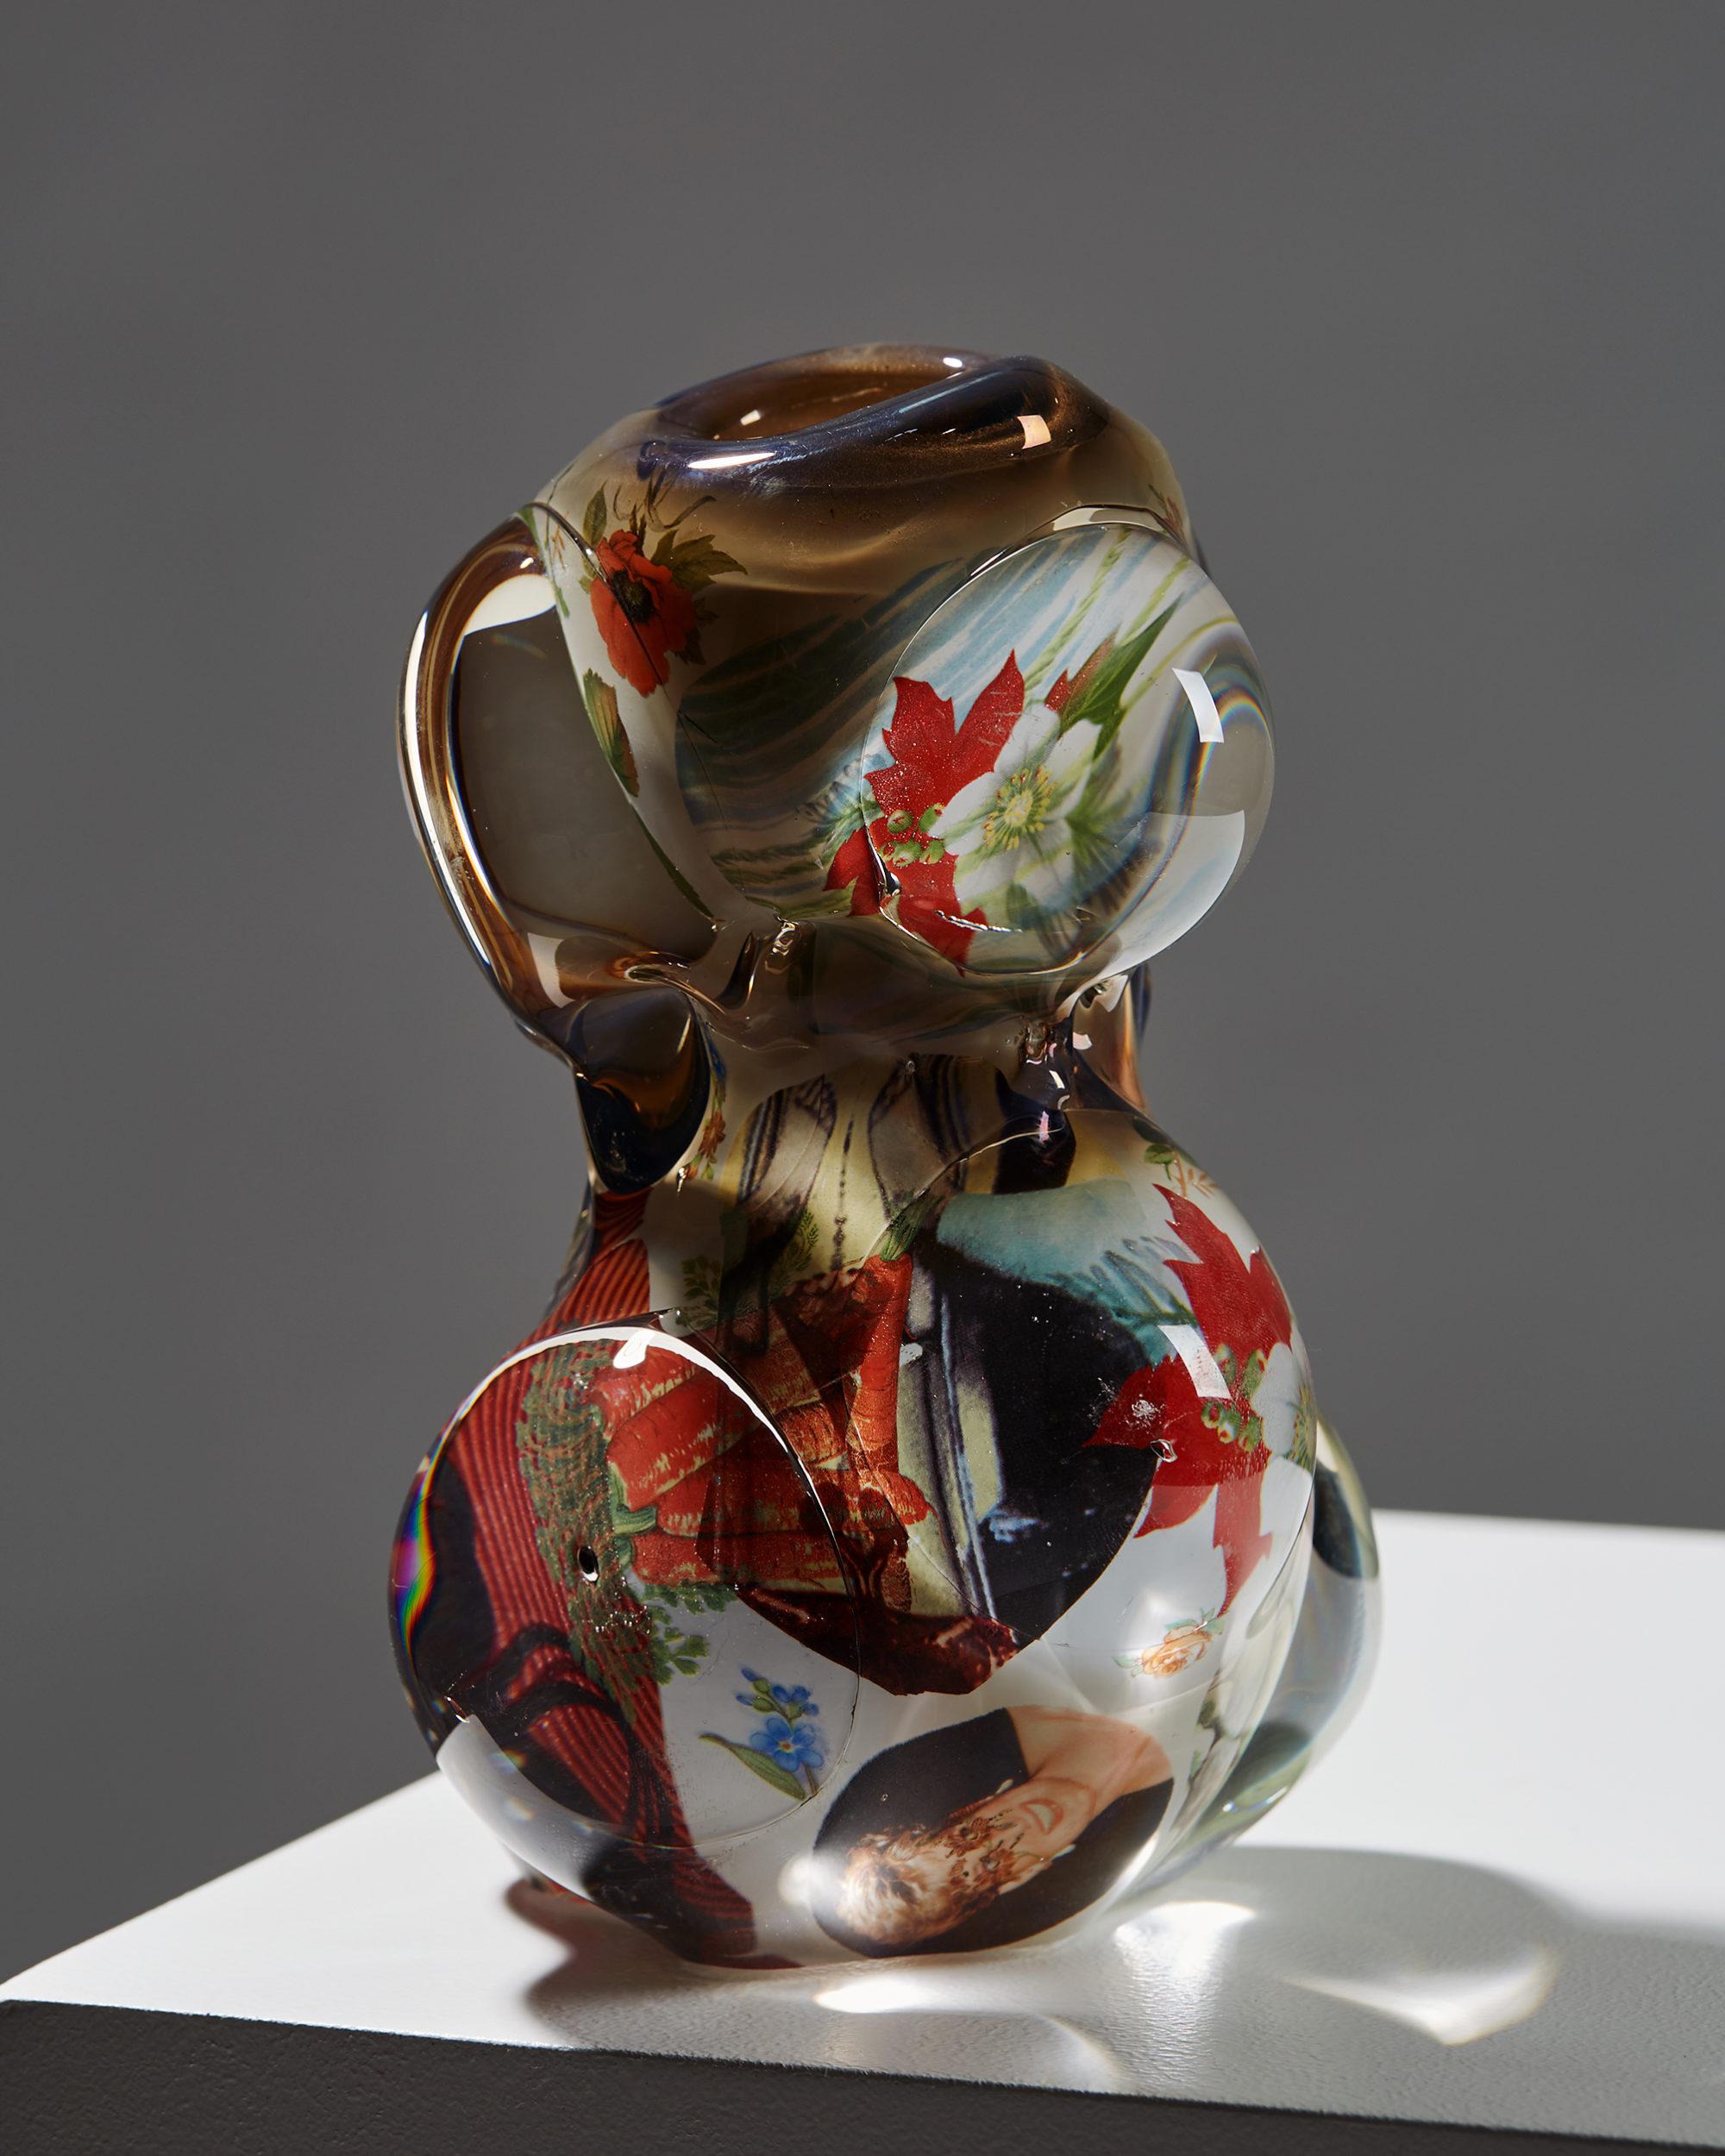 Vase “Fabula” designed by Per B. Sundberg for Orrefors,
Sweden. 1998.

Paper and glass.

